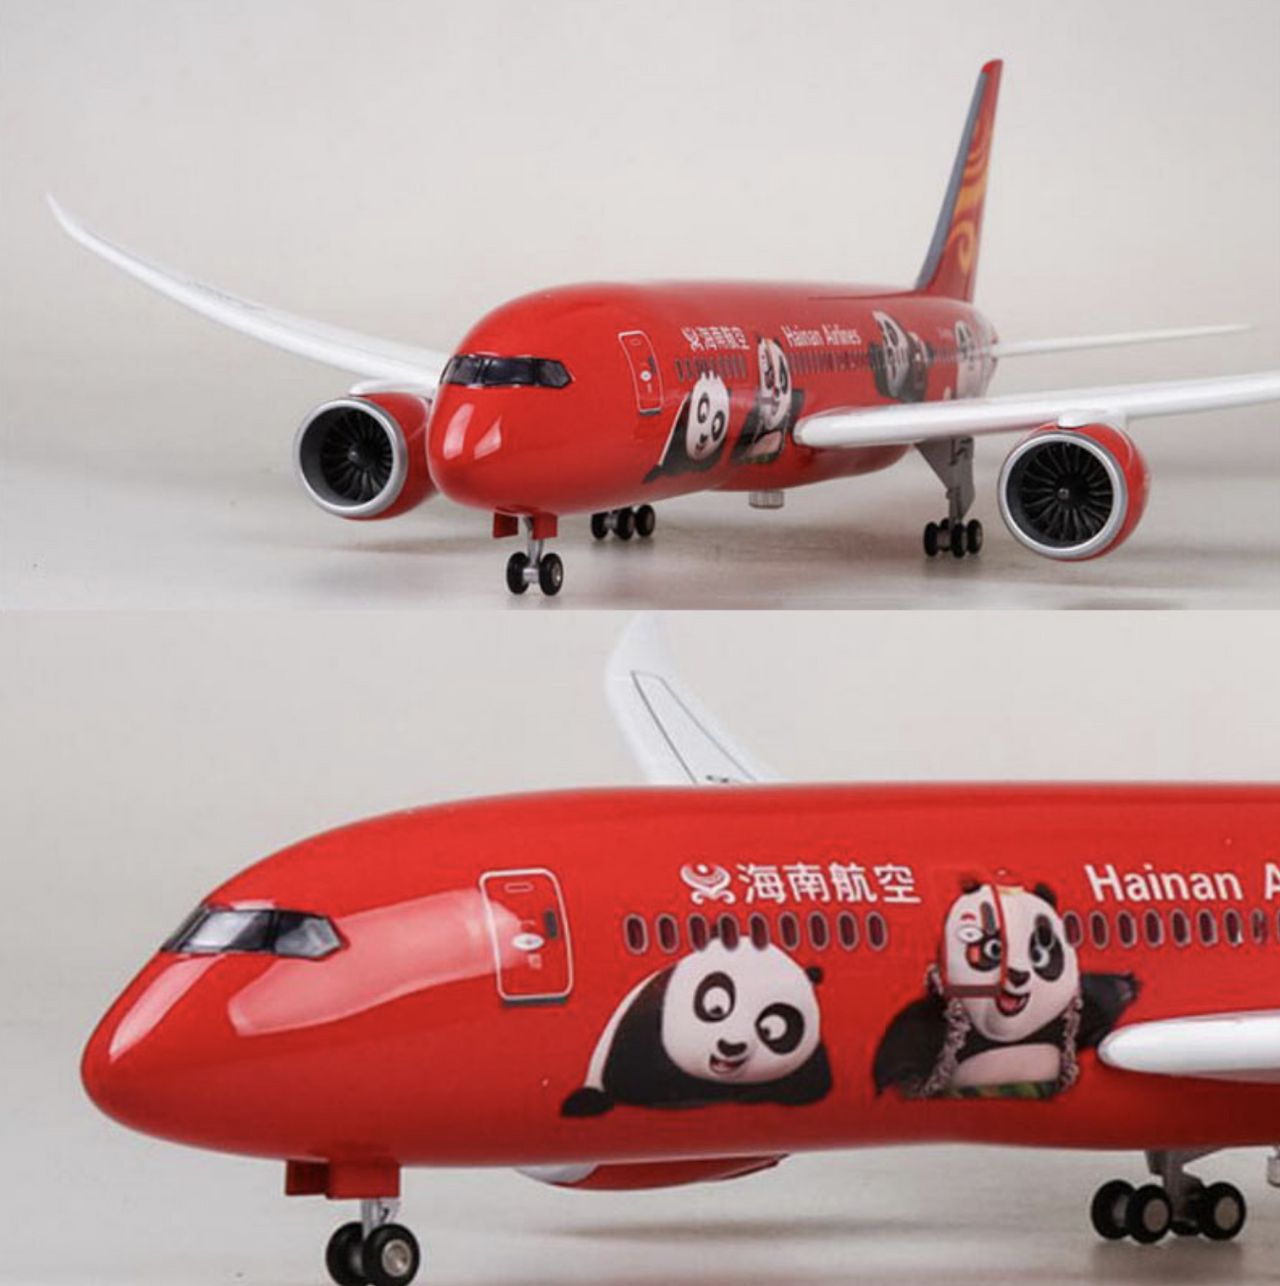 Hainan Airlines Panda Boeing 787 Airplane Model (1/130 Scale)